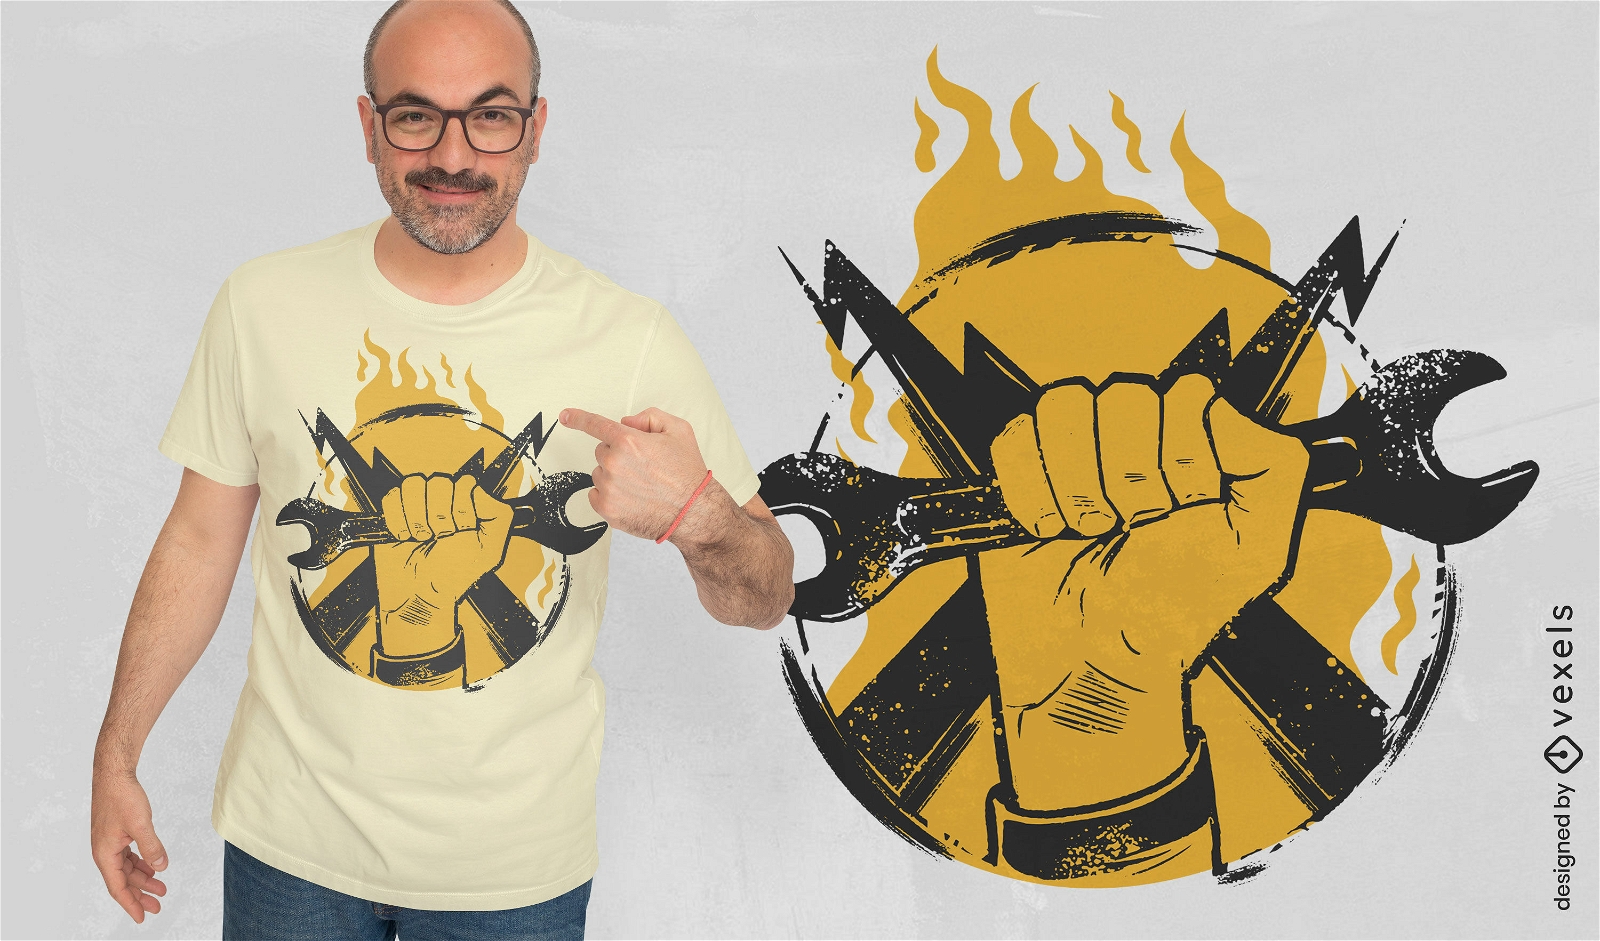 Labor day fist t-shirt design